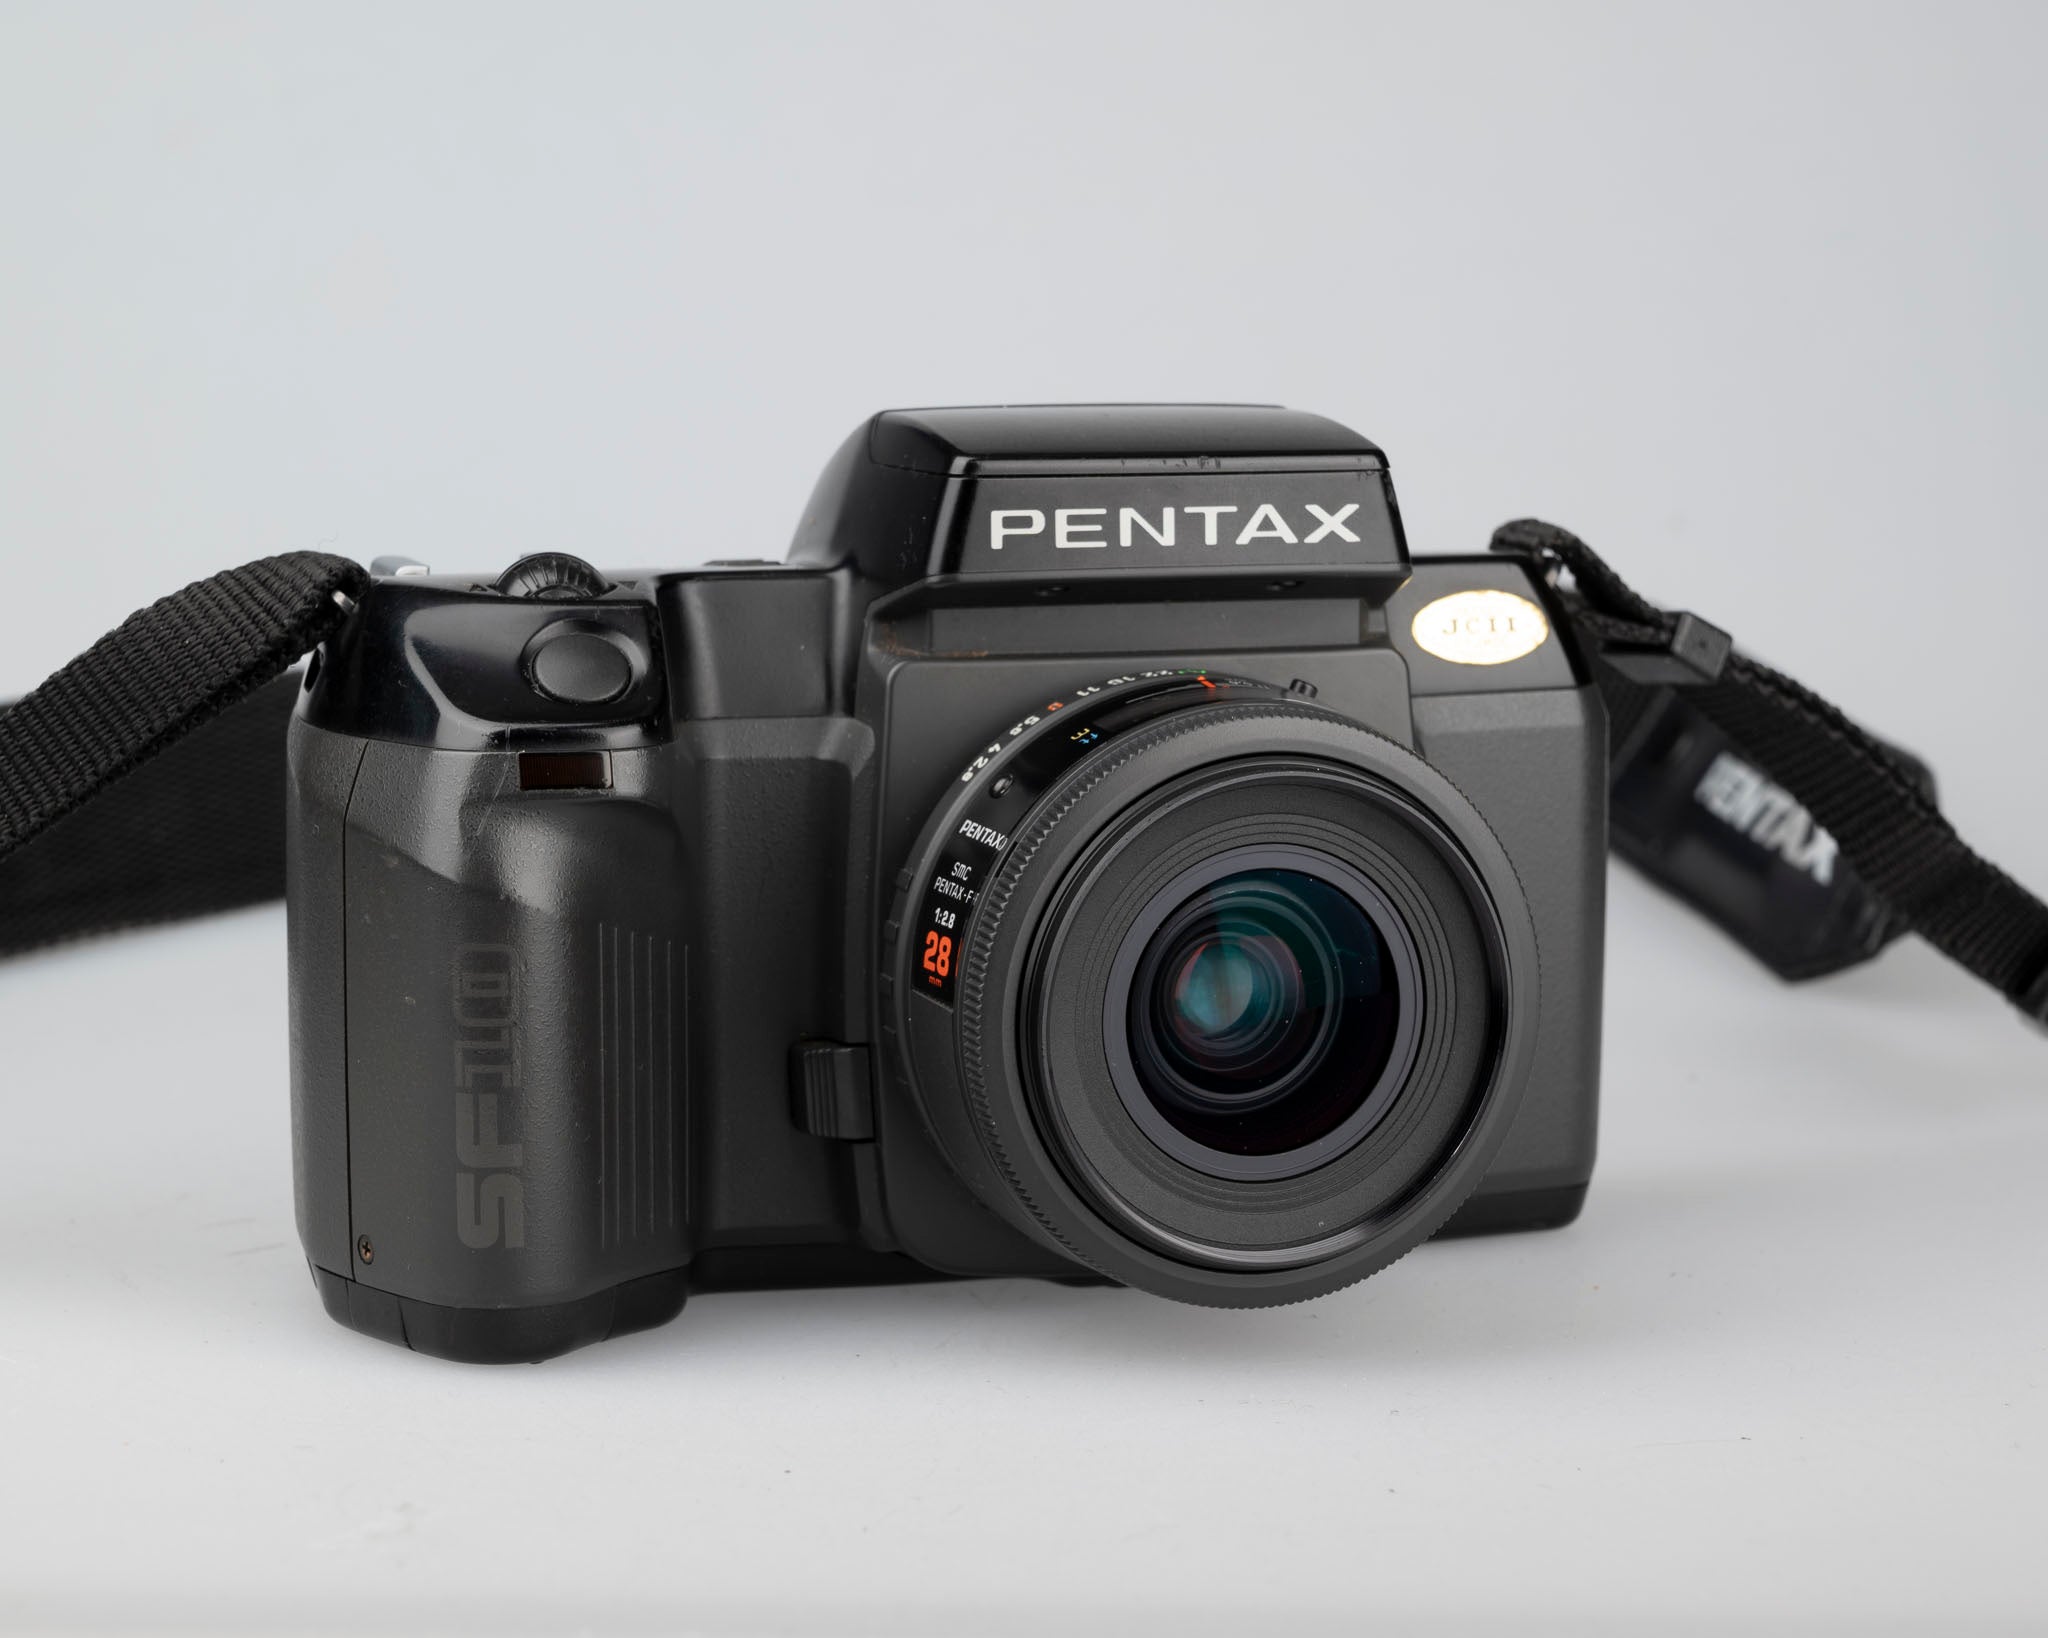 Pentax SF10 35mm SLR w/ SMC Pentax-F 28mm f2.8 compact prime lens (serial  4195760)